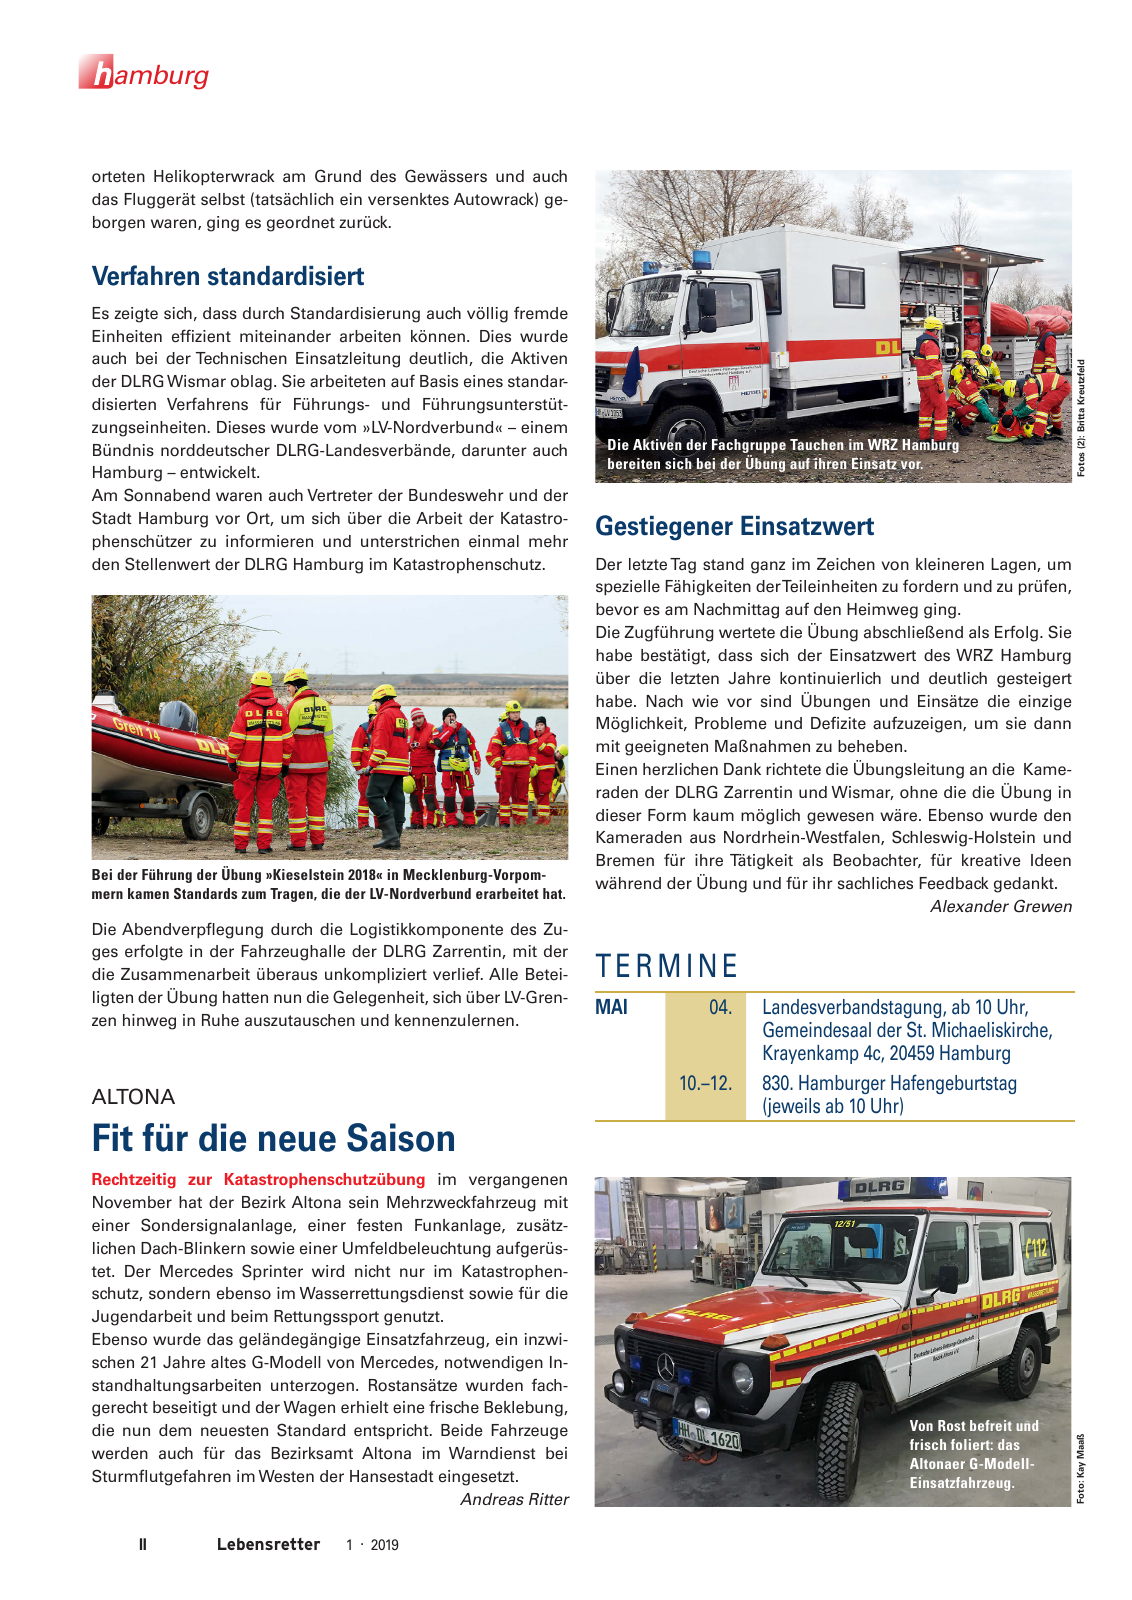 Vorschau Lebensretter 1/2019 –  Regionalausgabe Hamburg Seite 4